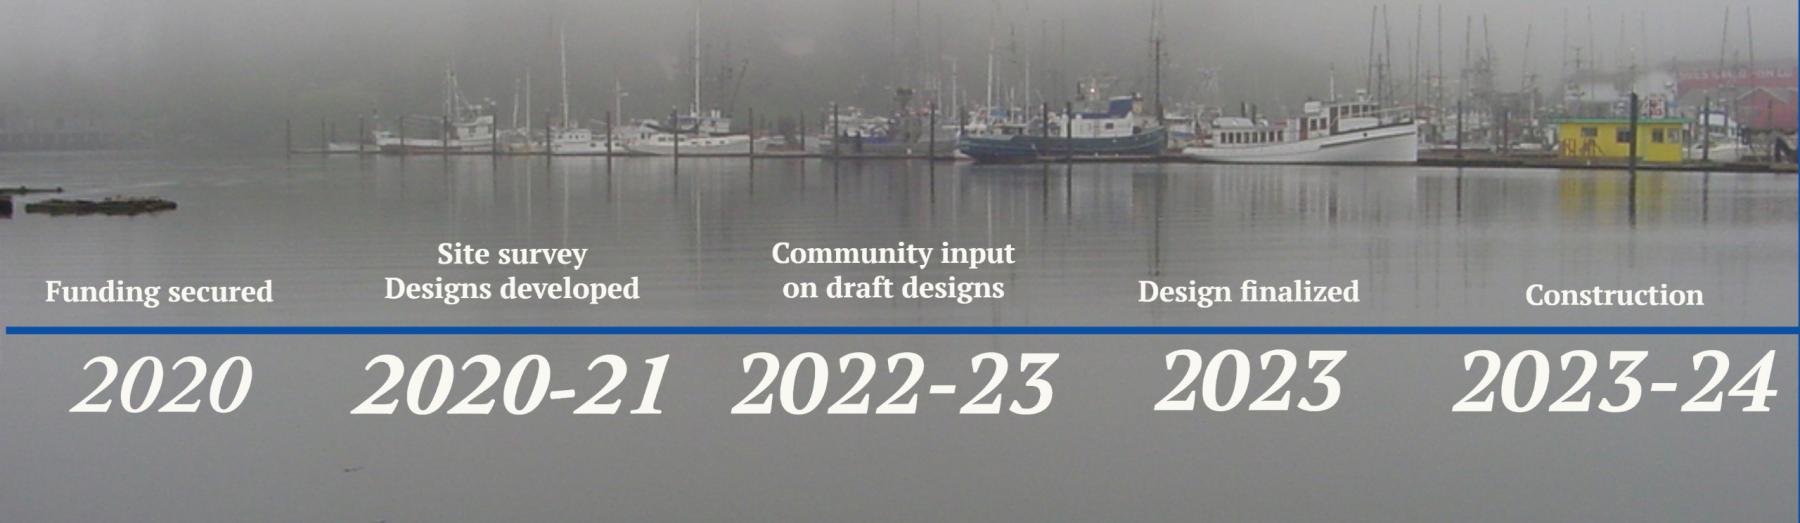 timeline: funding secured 2020; draft designs developed 2020-2021; Community input on draft designs – 2022-23;   Design finalized – 2023;   Construction 2023-24 